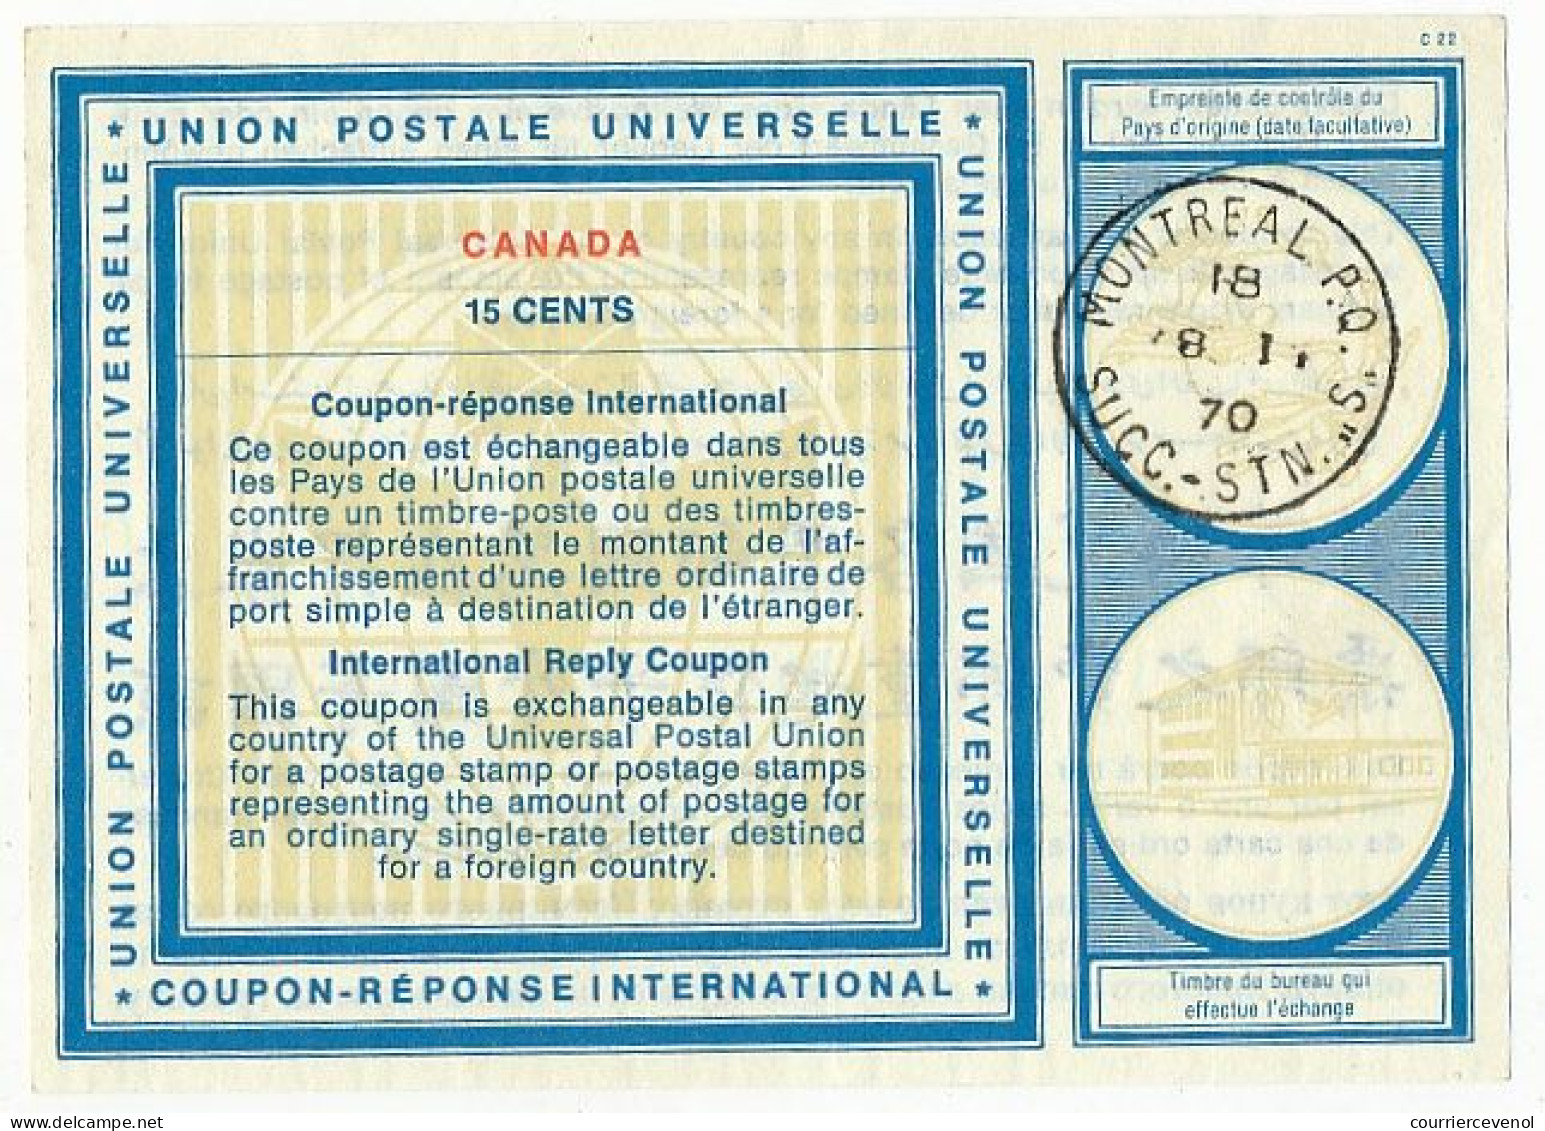 CANADA - COUPON REPONSE INTERNATIONAL. INTERNATIONAL REPLY COUPON. 15 CENTS. MONTREAL P.Q. - Buoni Risposta Internazionali (Coupon)